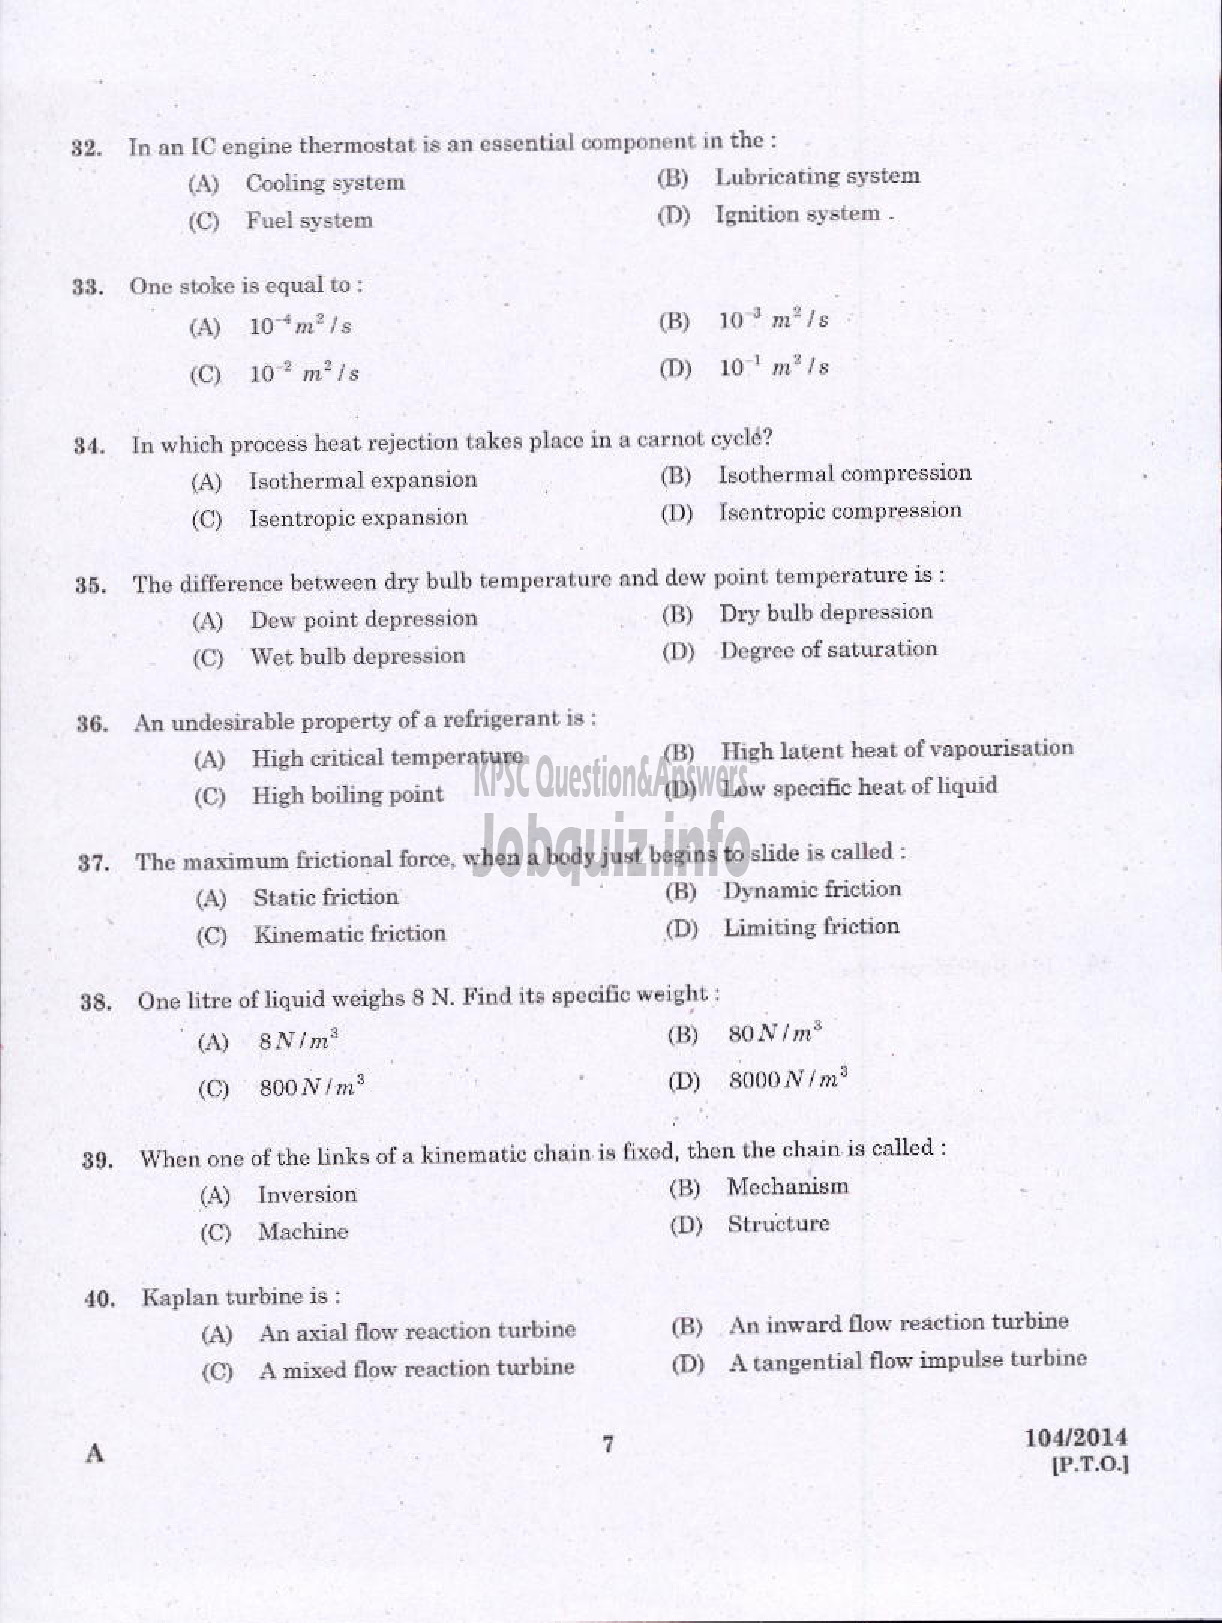 Kerala PSC Question Paper - OVERSEER DRAFTSMAN MECHANICAL GR I IRRIGATION DIRECT AND DEPT QUOTA-5